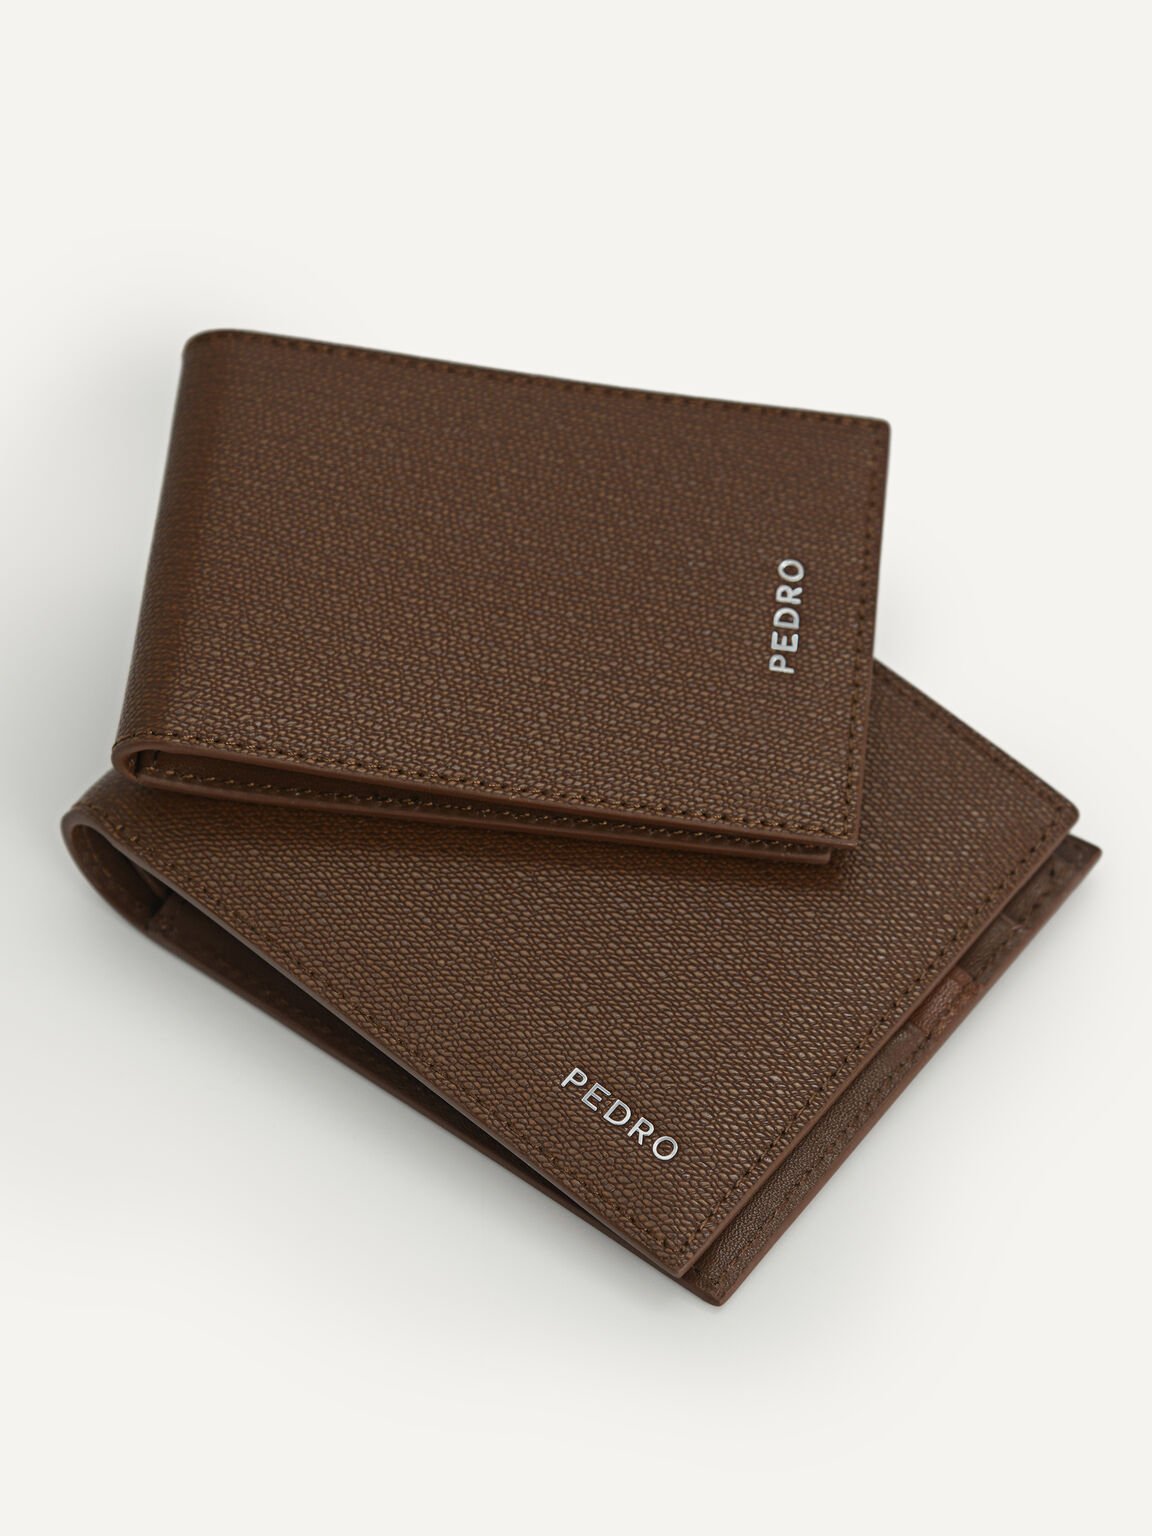 Full-Grain Leather Wallet with Insert, Dark Brown